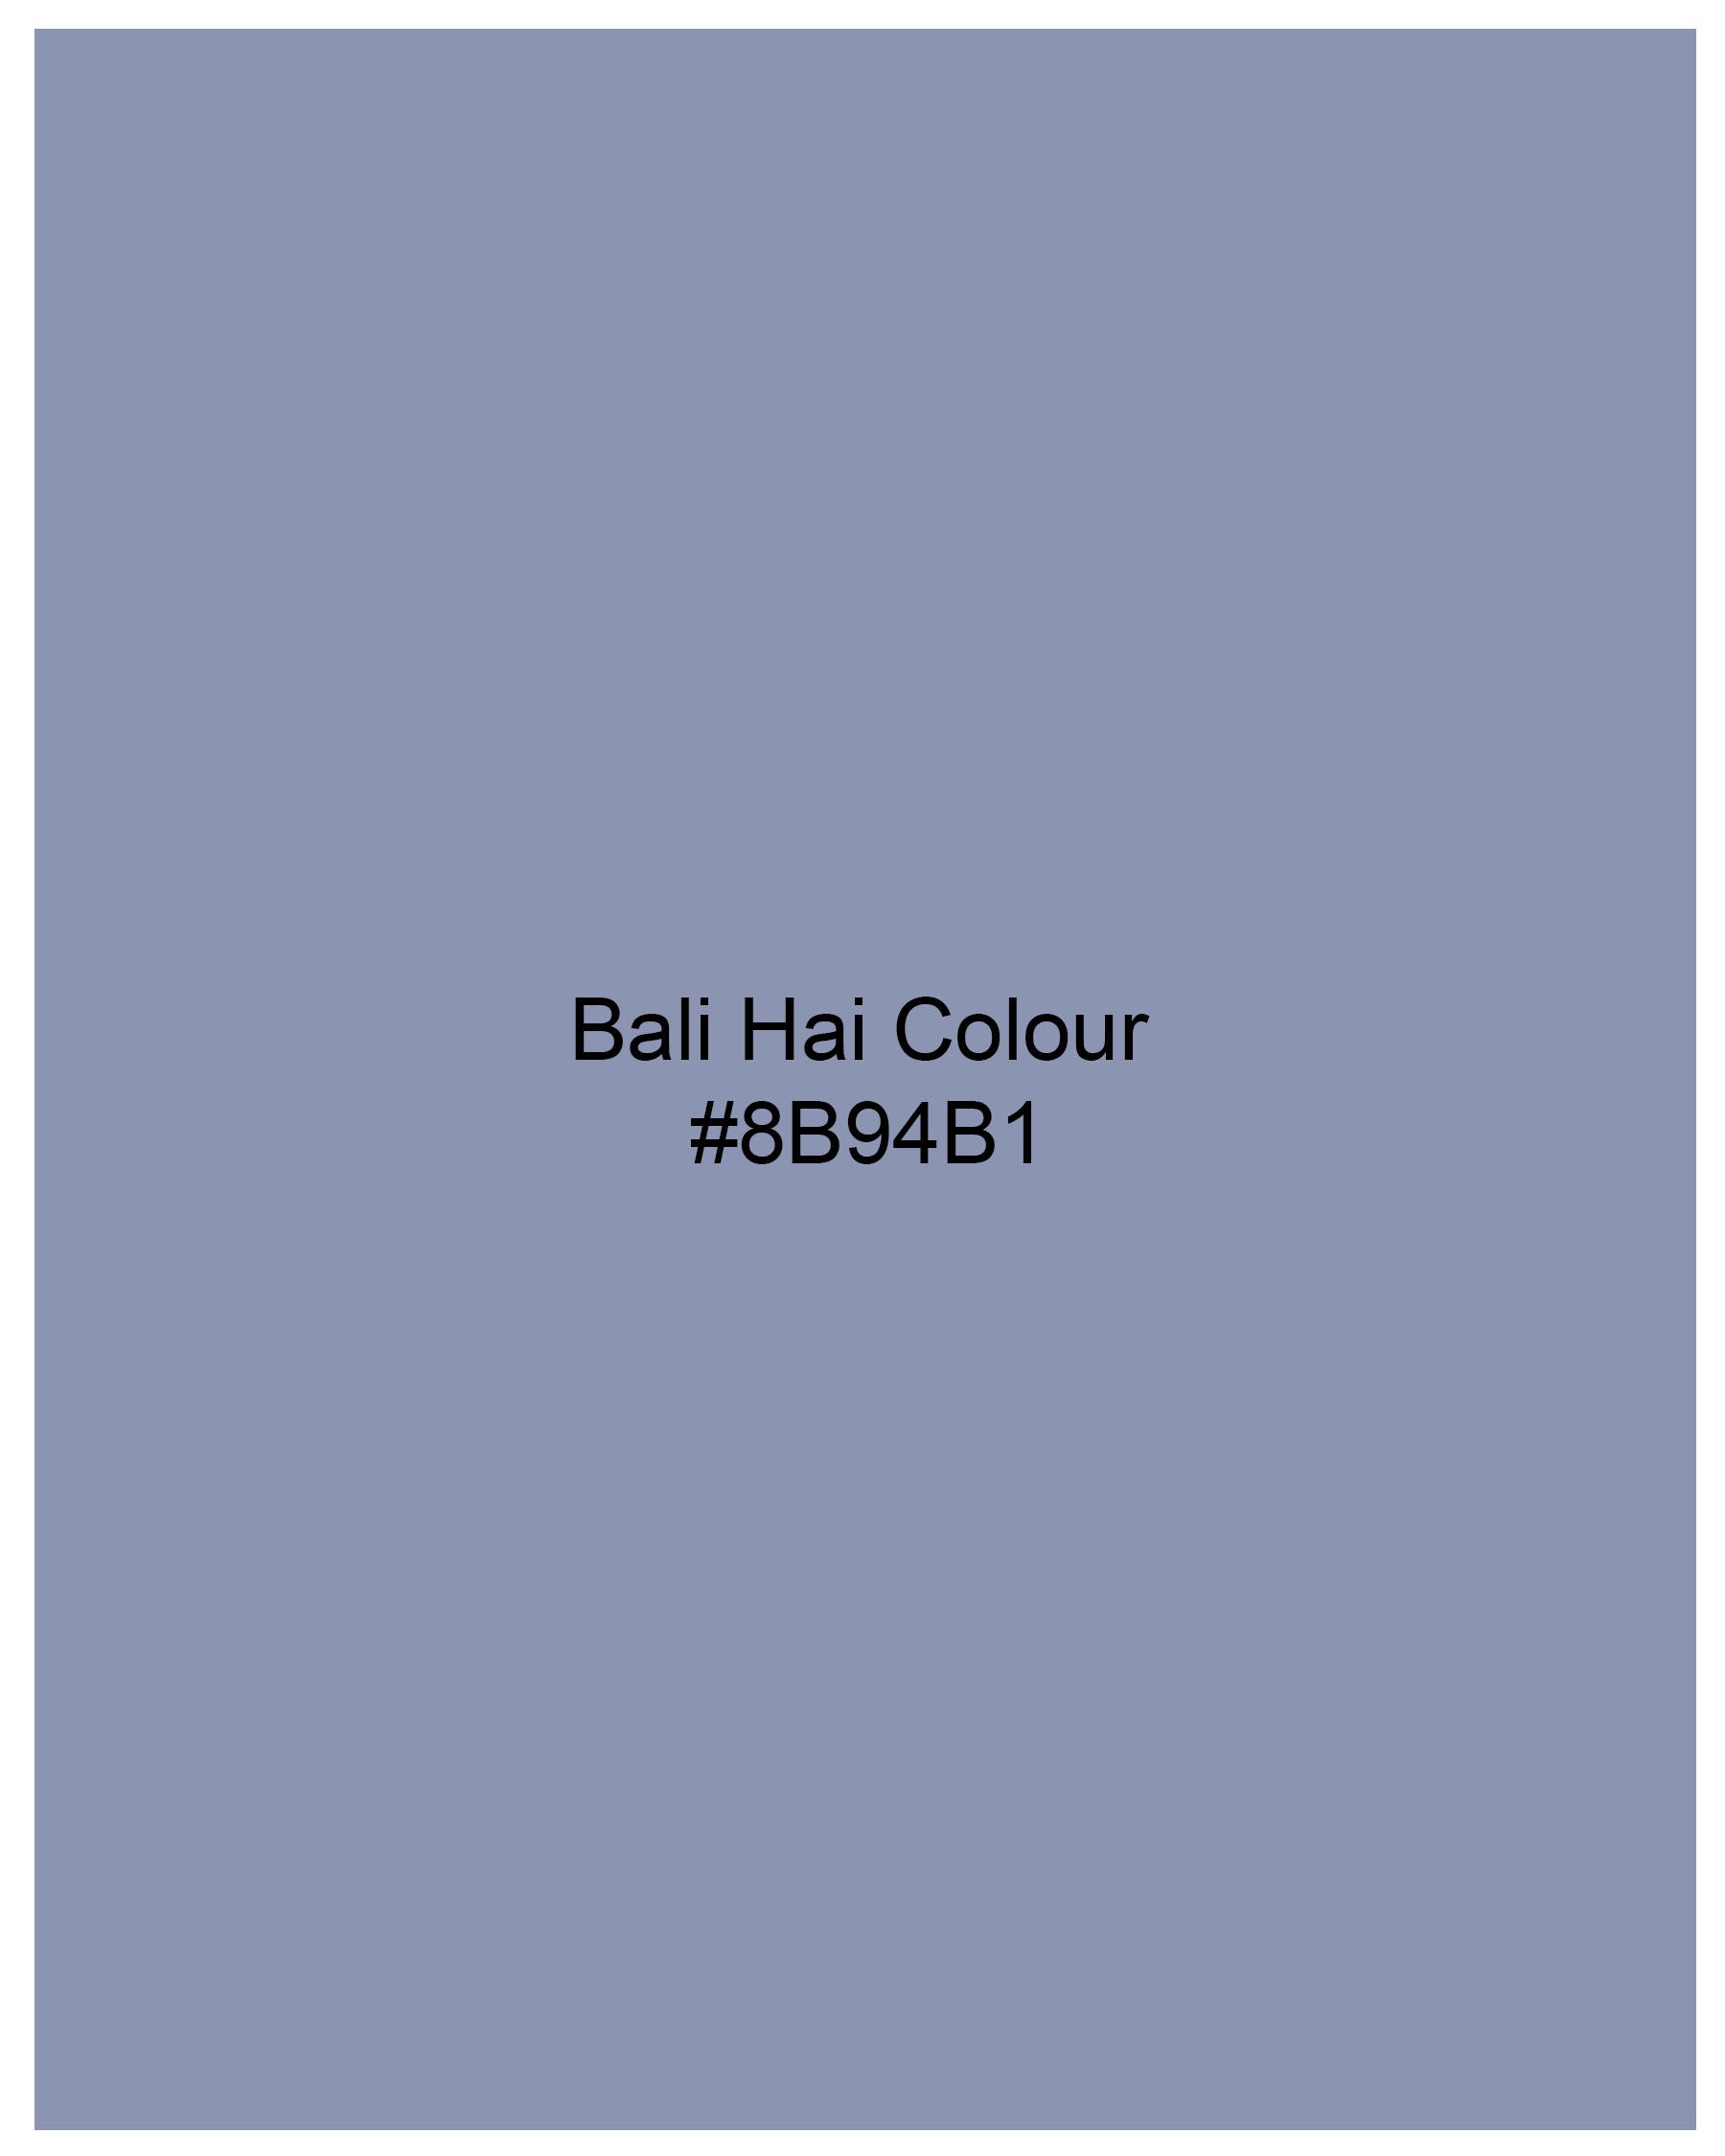 Bali Hai Blue Luxurious Linen Shirt 7864-BLE-38, 7864-BLE-H-38, 7864-BLE-39, 7864-BLE-H-39, 7864-BLE-40, 7864-BLE-H-40, 7864-BLE-42, 7864-BLE-H-42, 7864-BLE-44, 7864-BLE-H-44, 7864-BLE-46, 7864-BLE-H-46, 7864-BLE-48, 7864-BLE-H-48, 7864-BLE-50, 7864-BLE-H-50, 7864-BLE-52, 7864-BLE-H-52